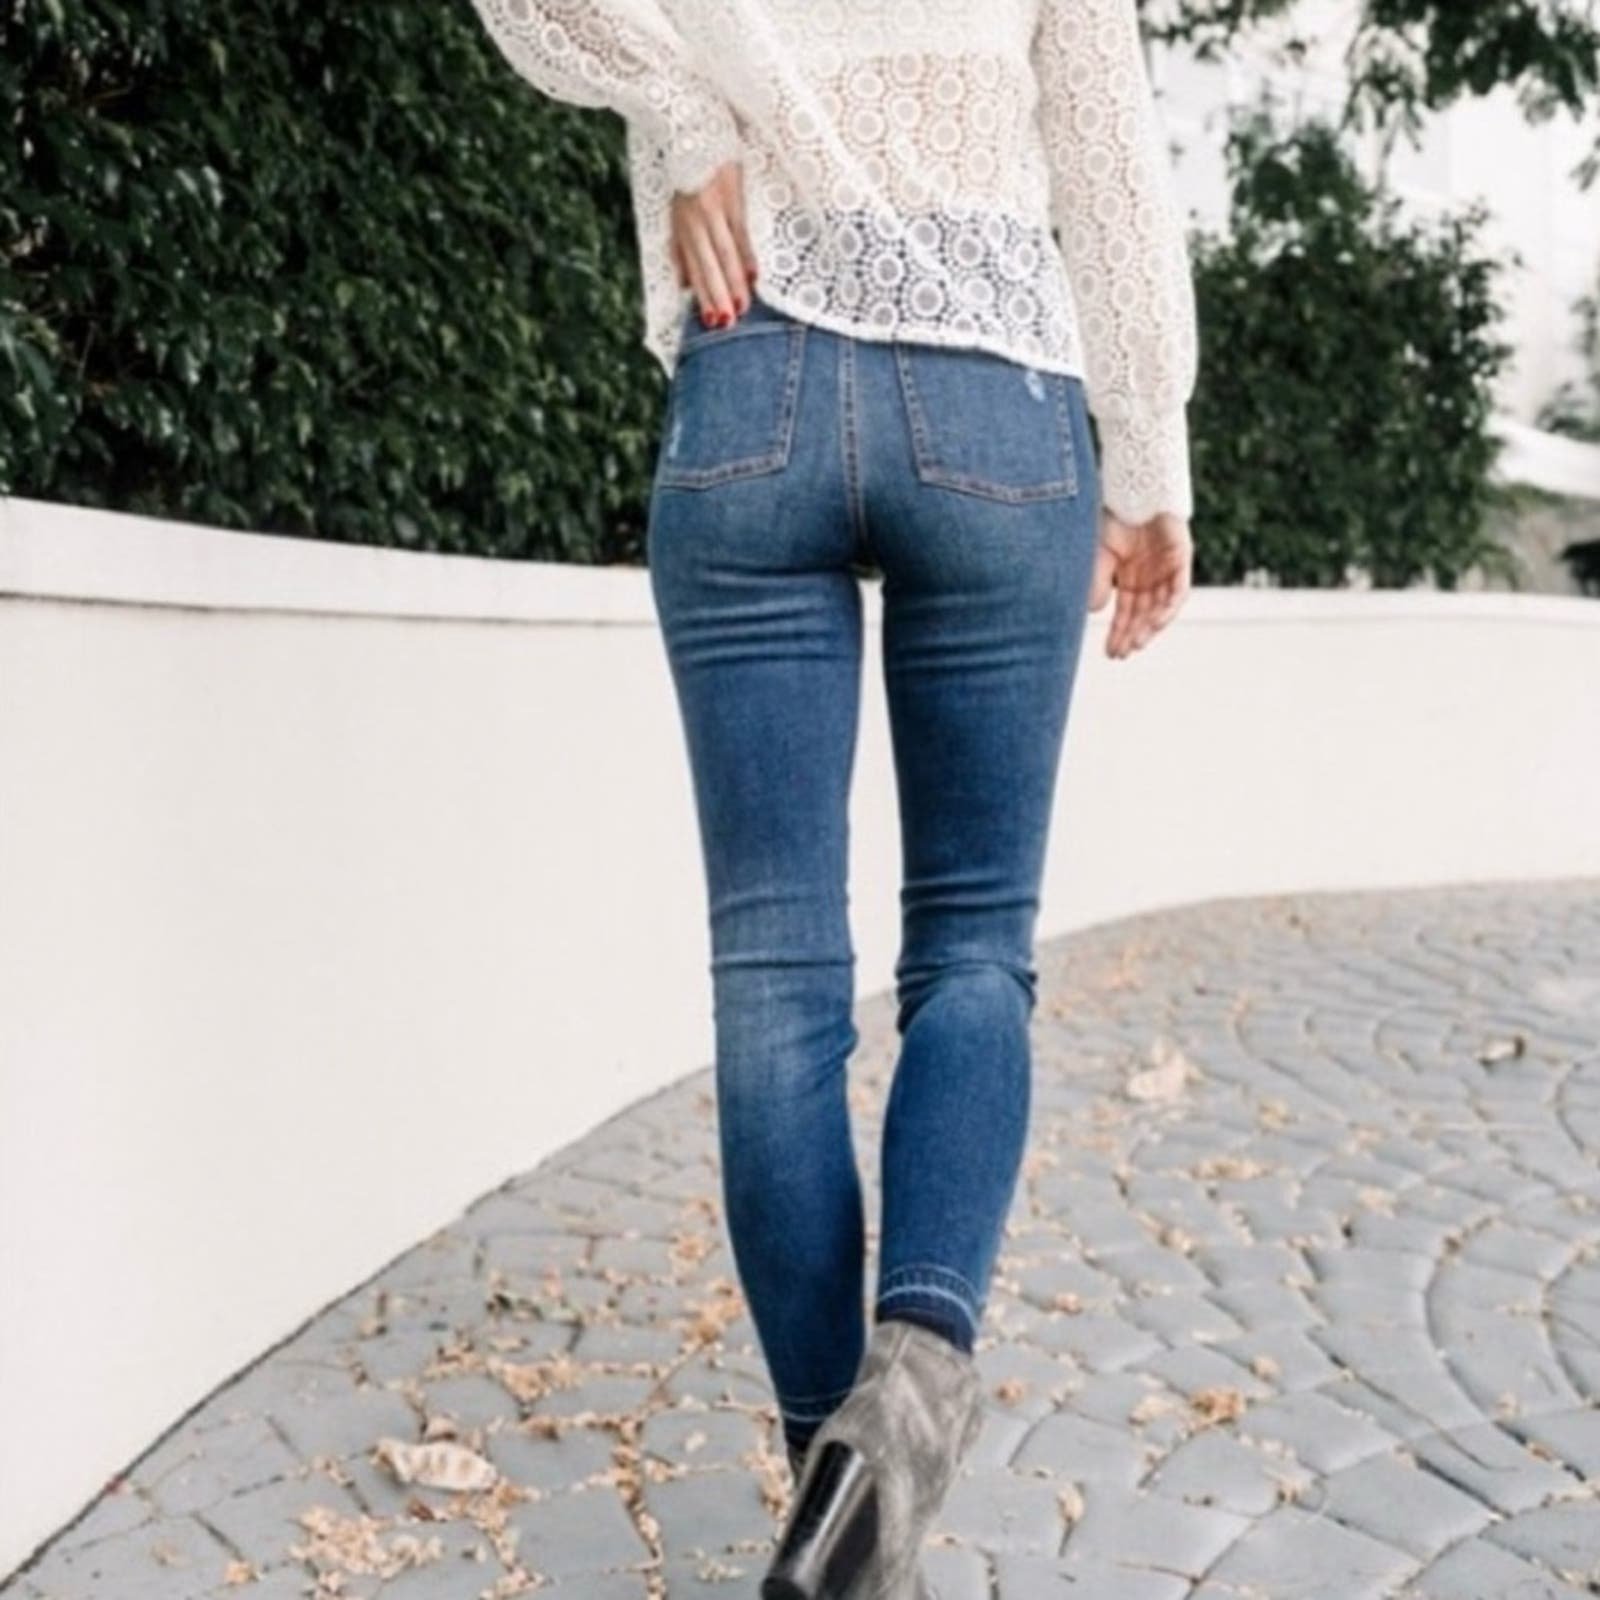 save up to 70% SPANX Distressed Denim Jegging Jeans Leggings Pants Shapewear Raw Hem Medium fFPY9a69m Great